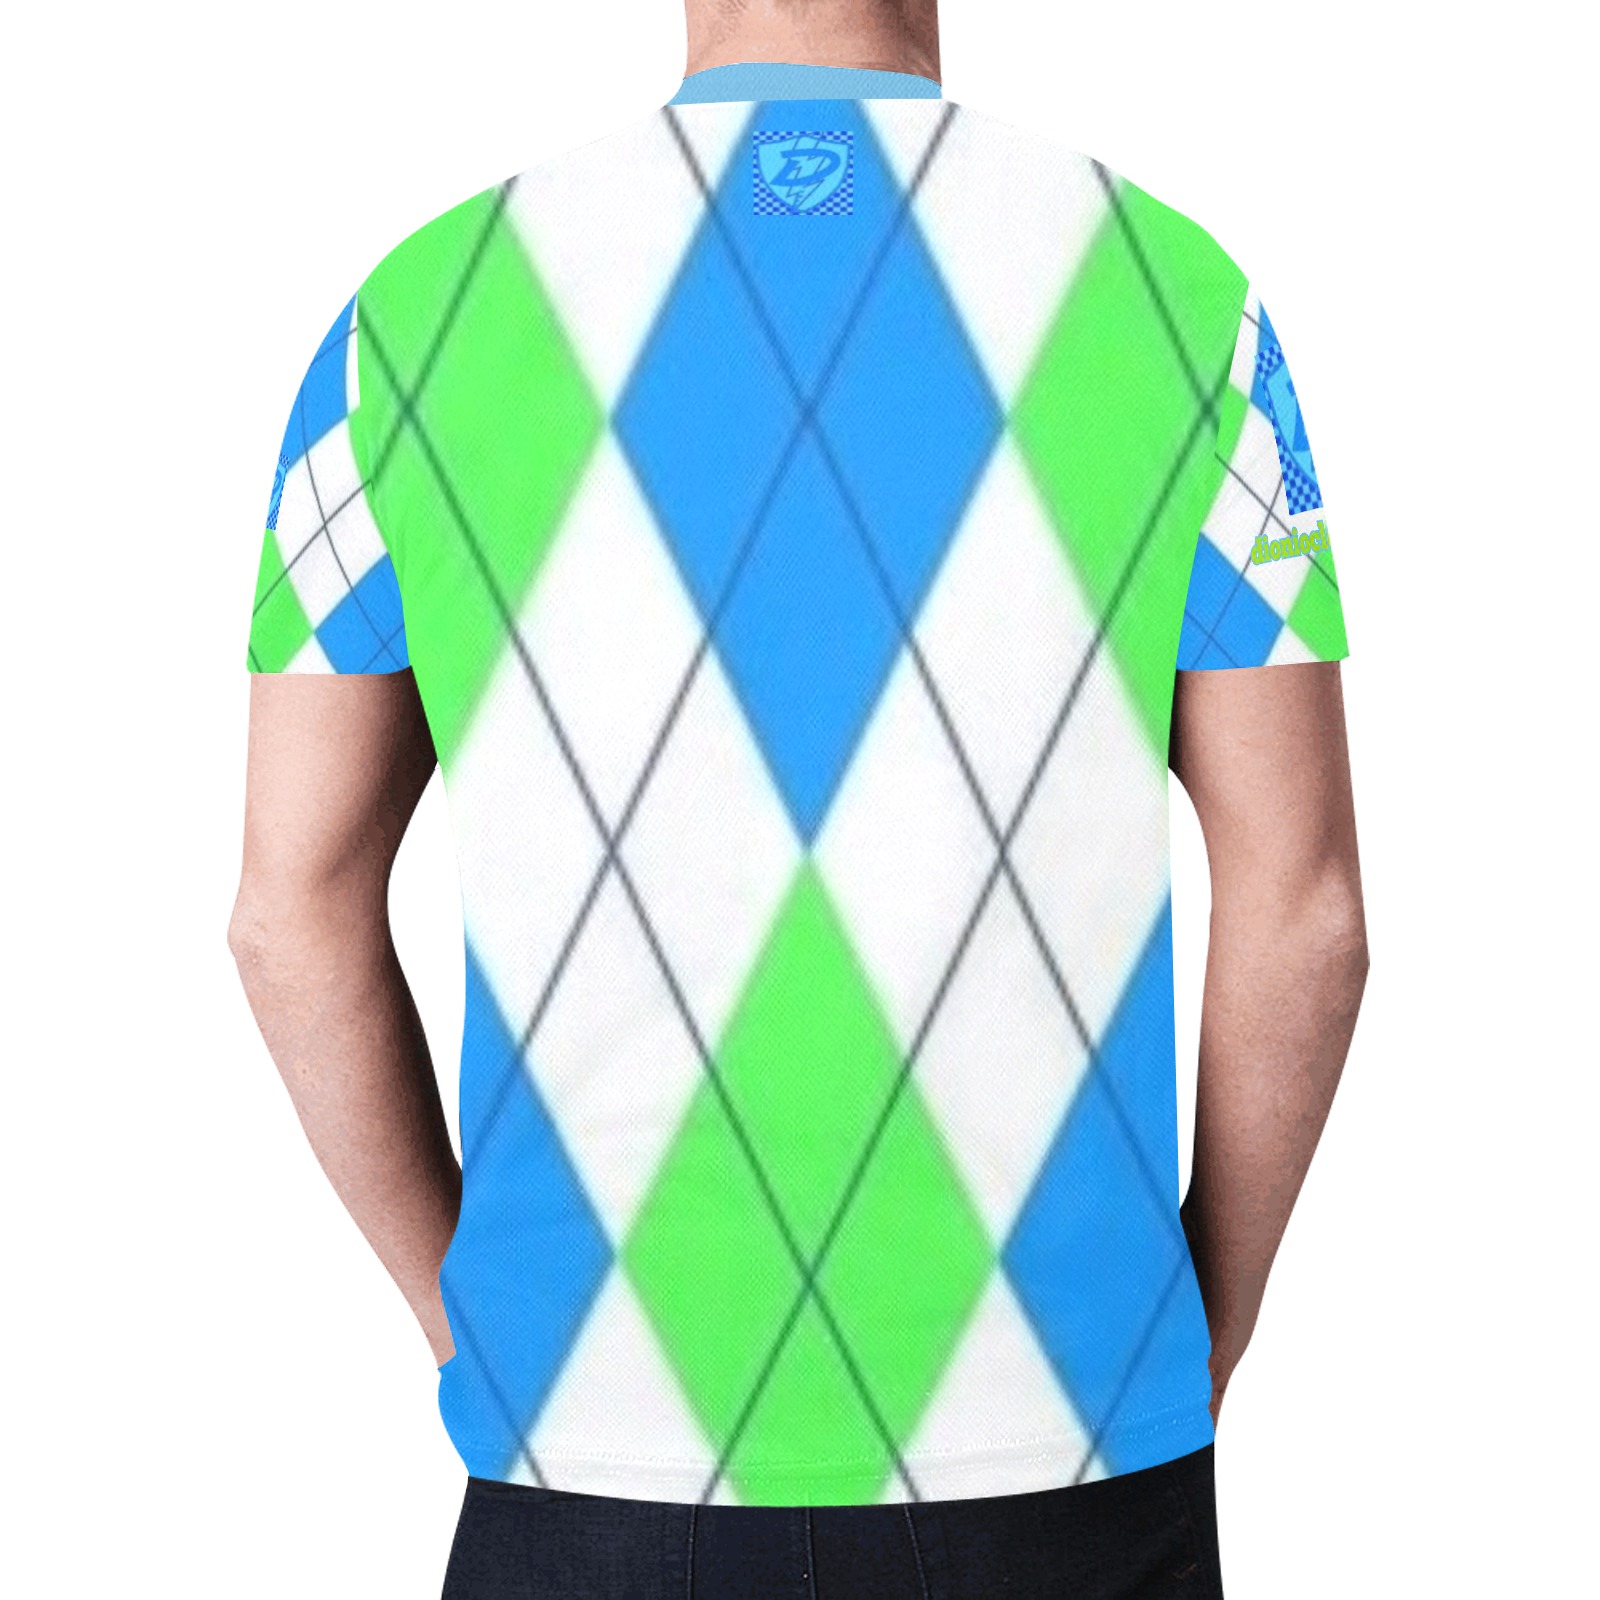 DIONIO Clothing - Argyle White Aqua Blue & Neon T-Shirt (Aqua Blue D-Shield Logo) New All Over Print T-shirt for Men (Model T45)